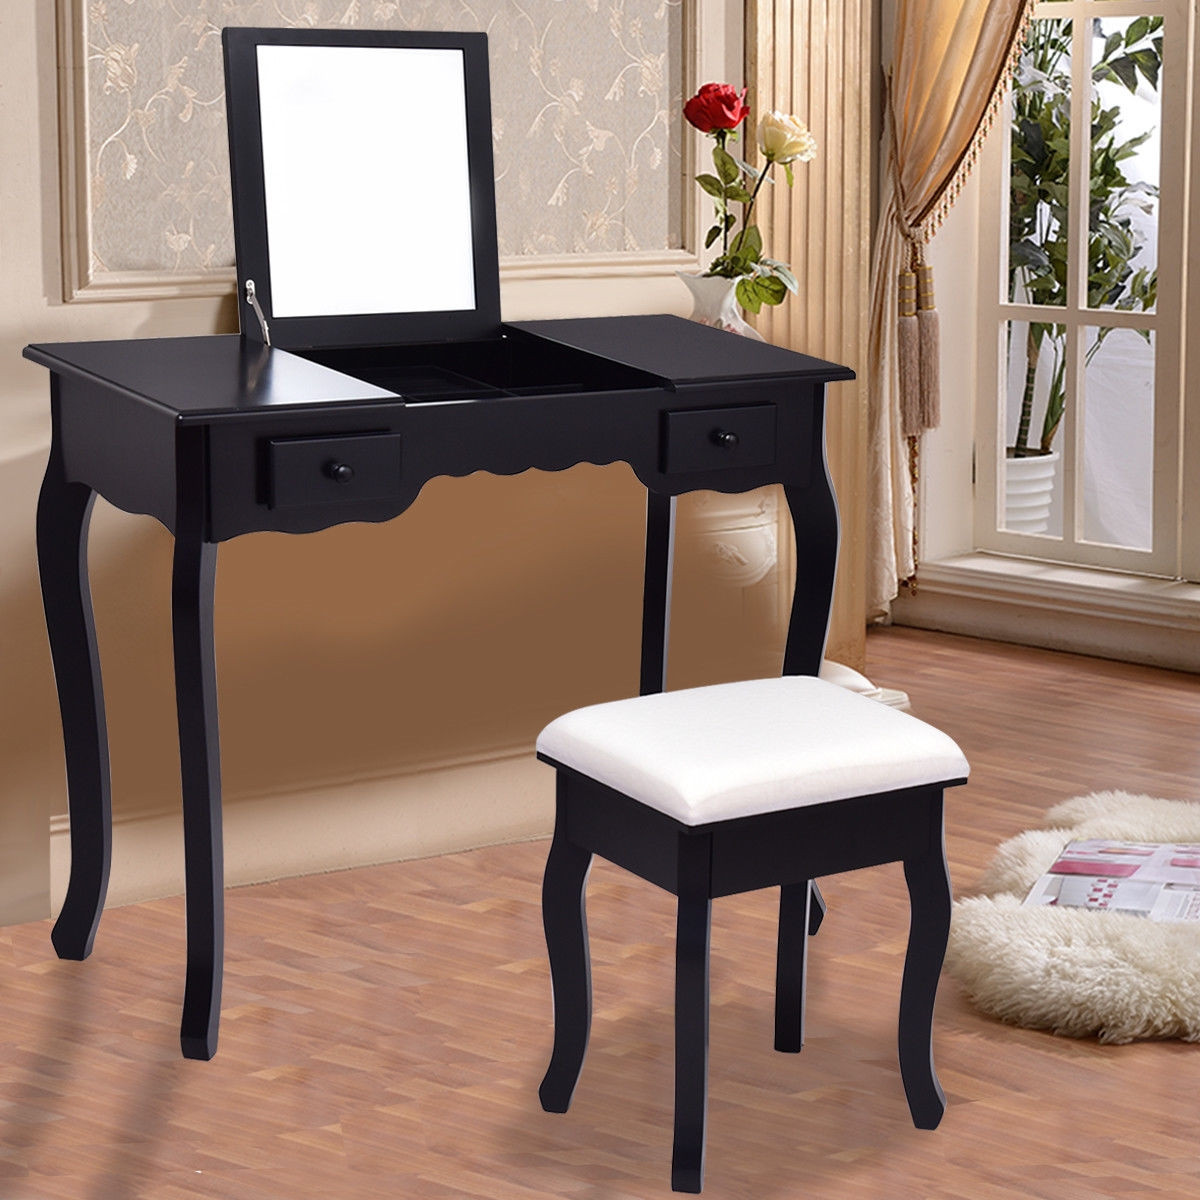 Mirrored Bathroom Dressing Vanity Table Set W / Stool